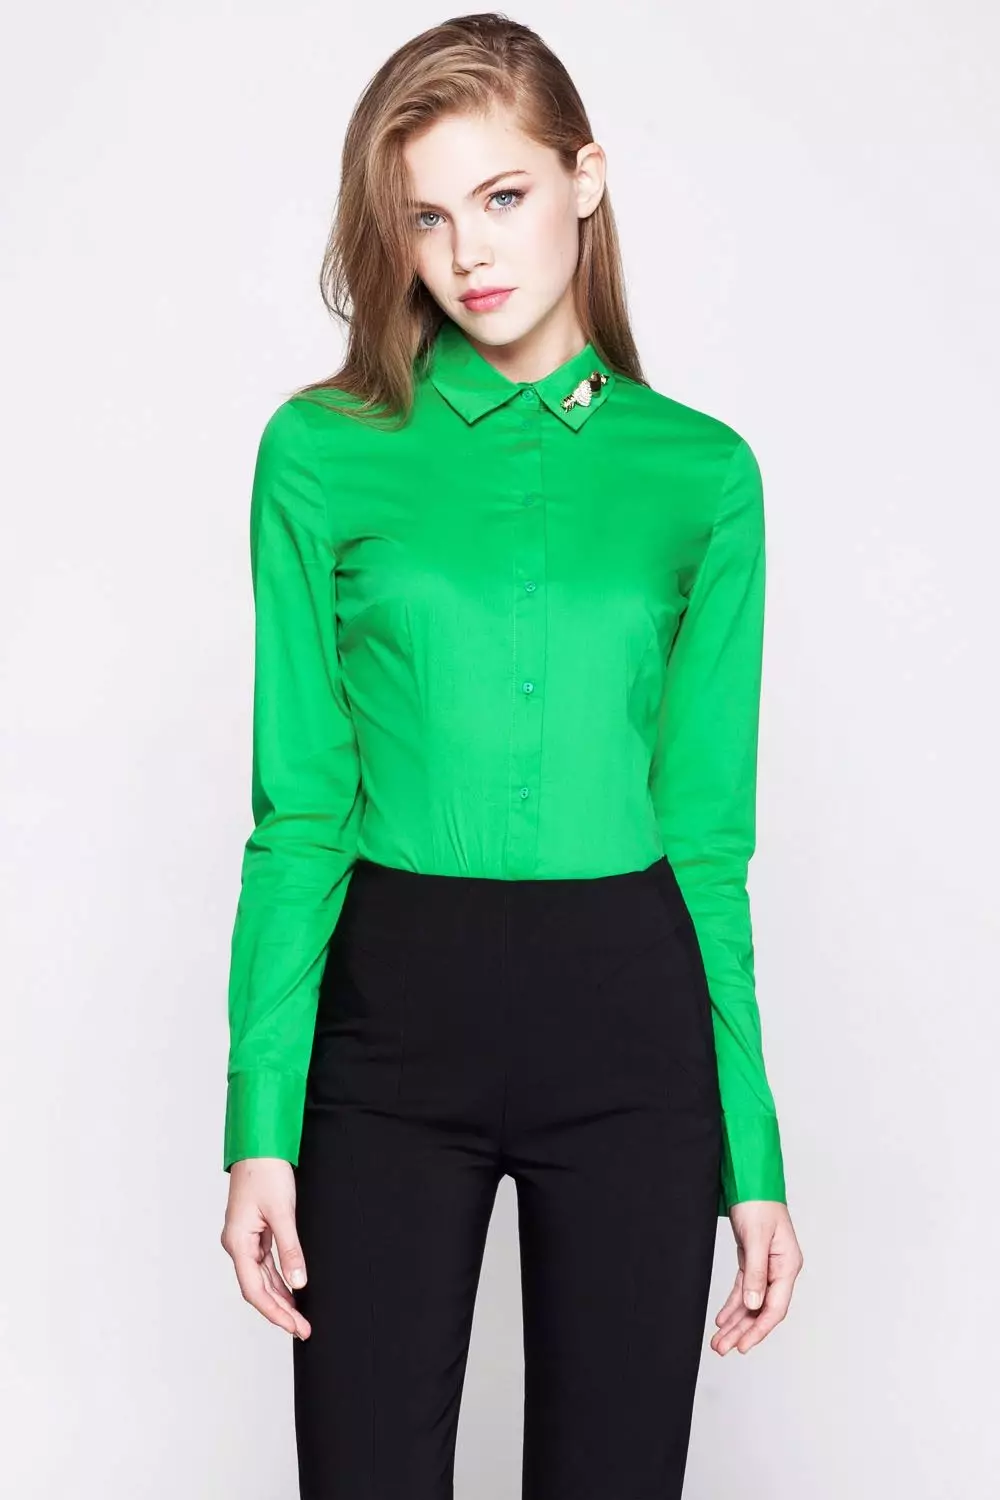 Camisas verdes (51 fotos): que está a levar, os modelos verdes verdes e verdes escuros 1232_24